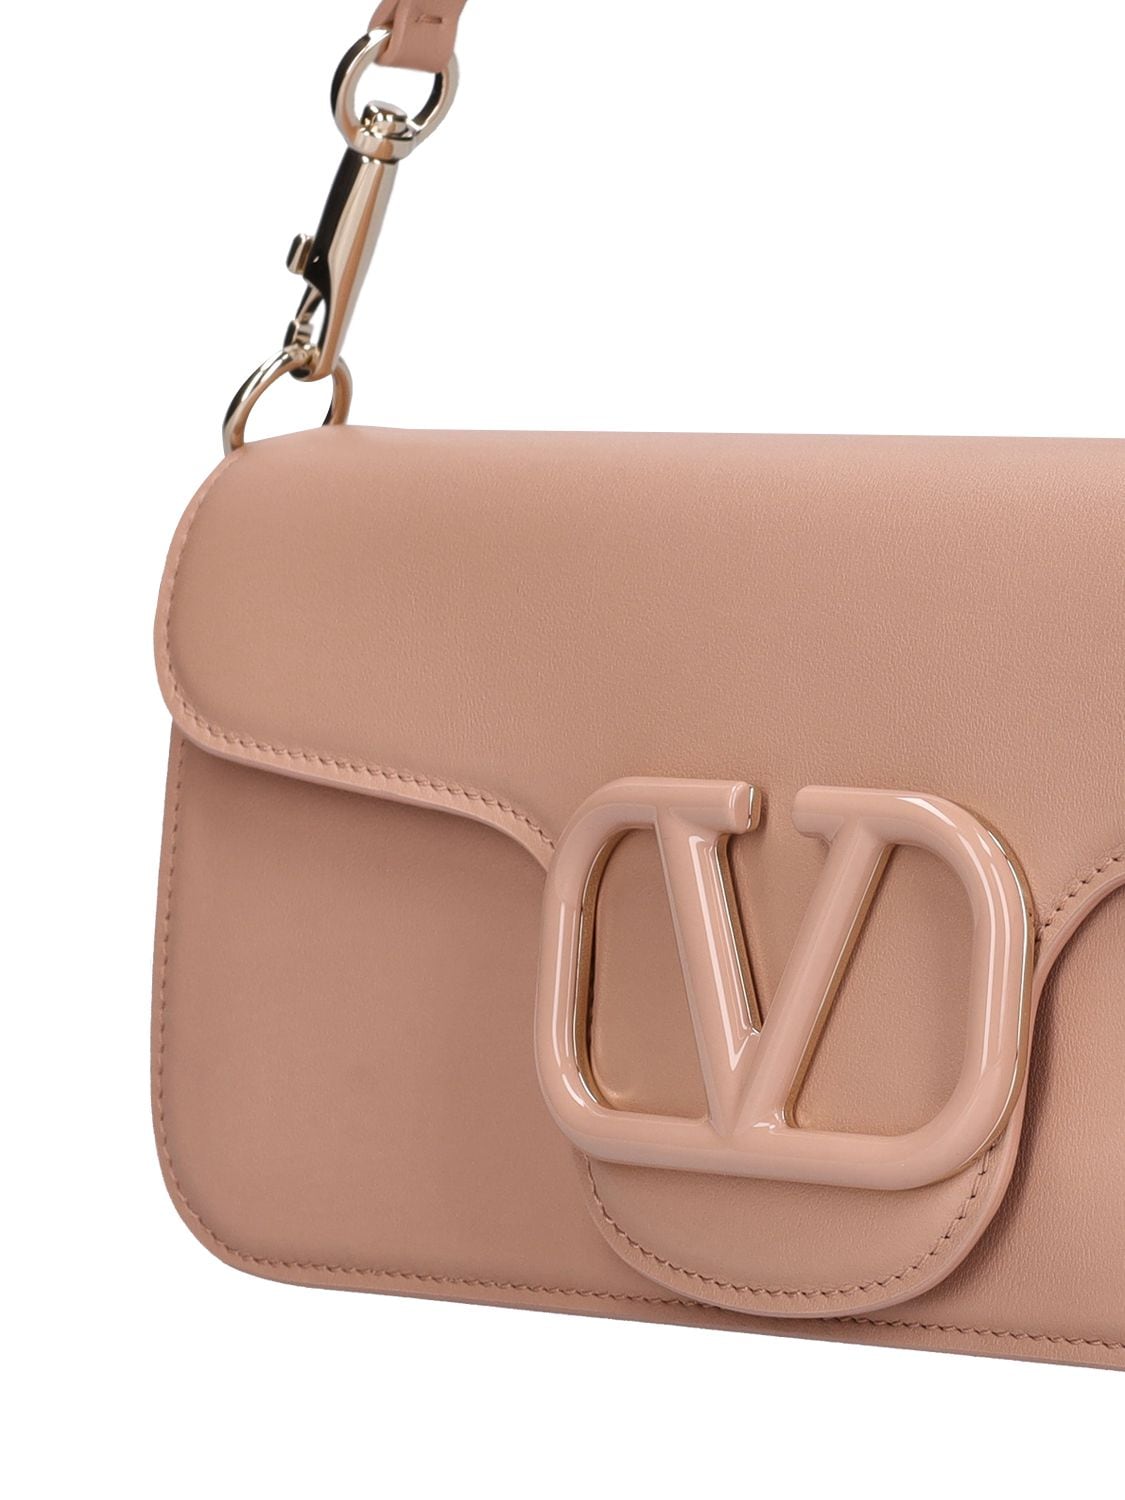 Valentino Garavani's Locò bag is your latest '90s-inspired style